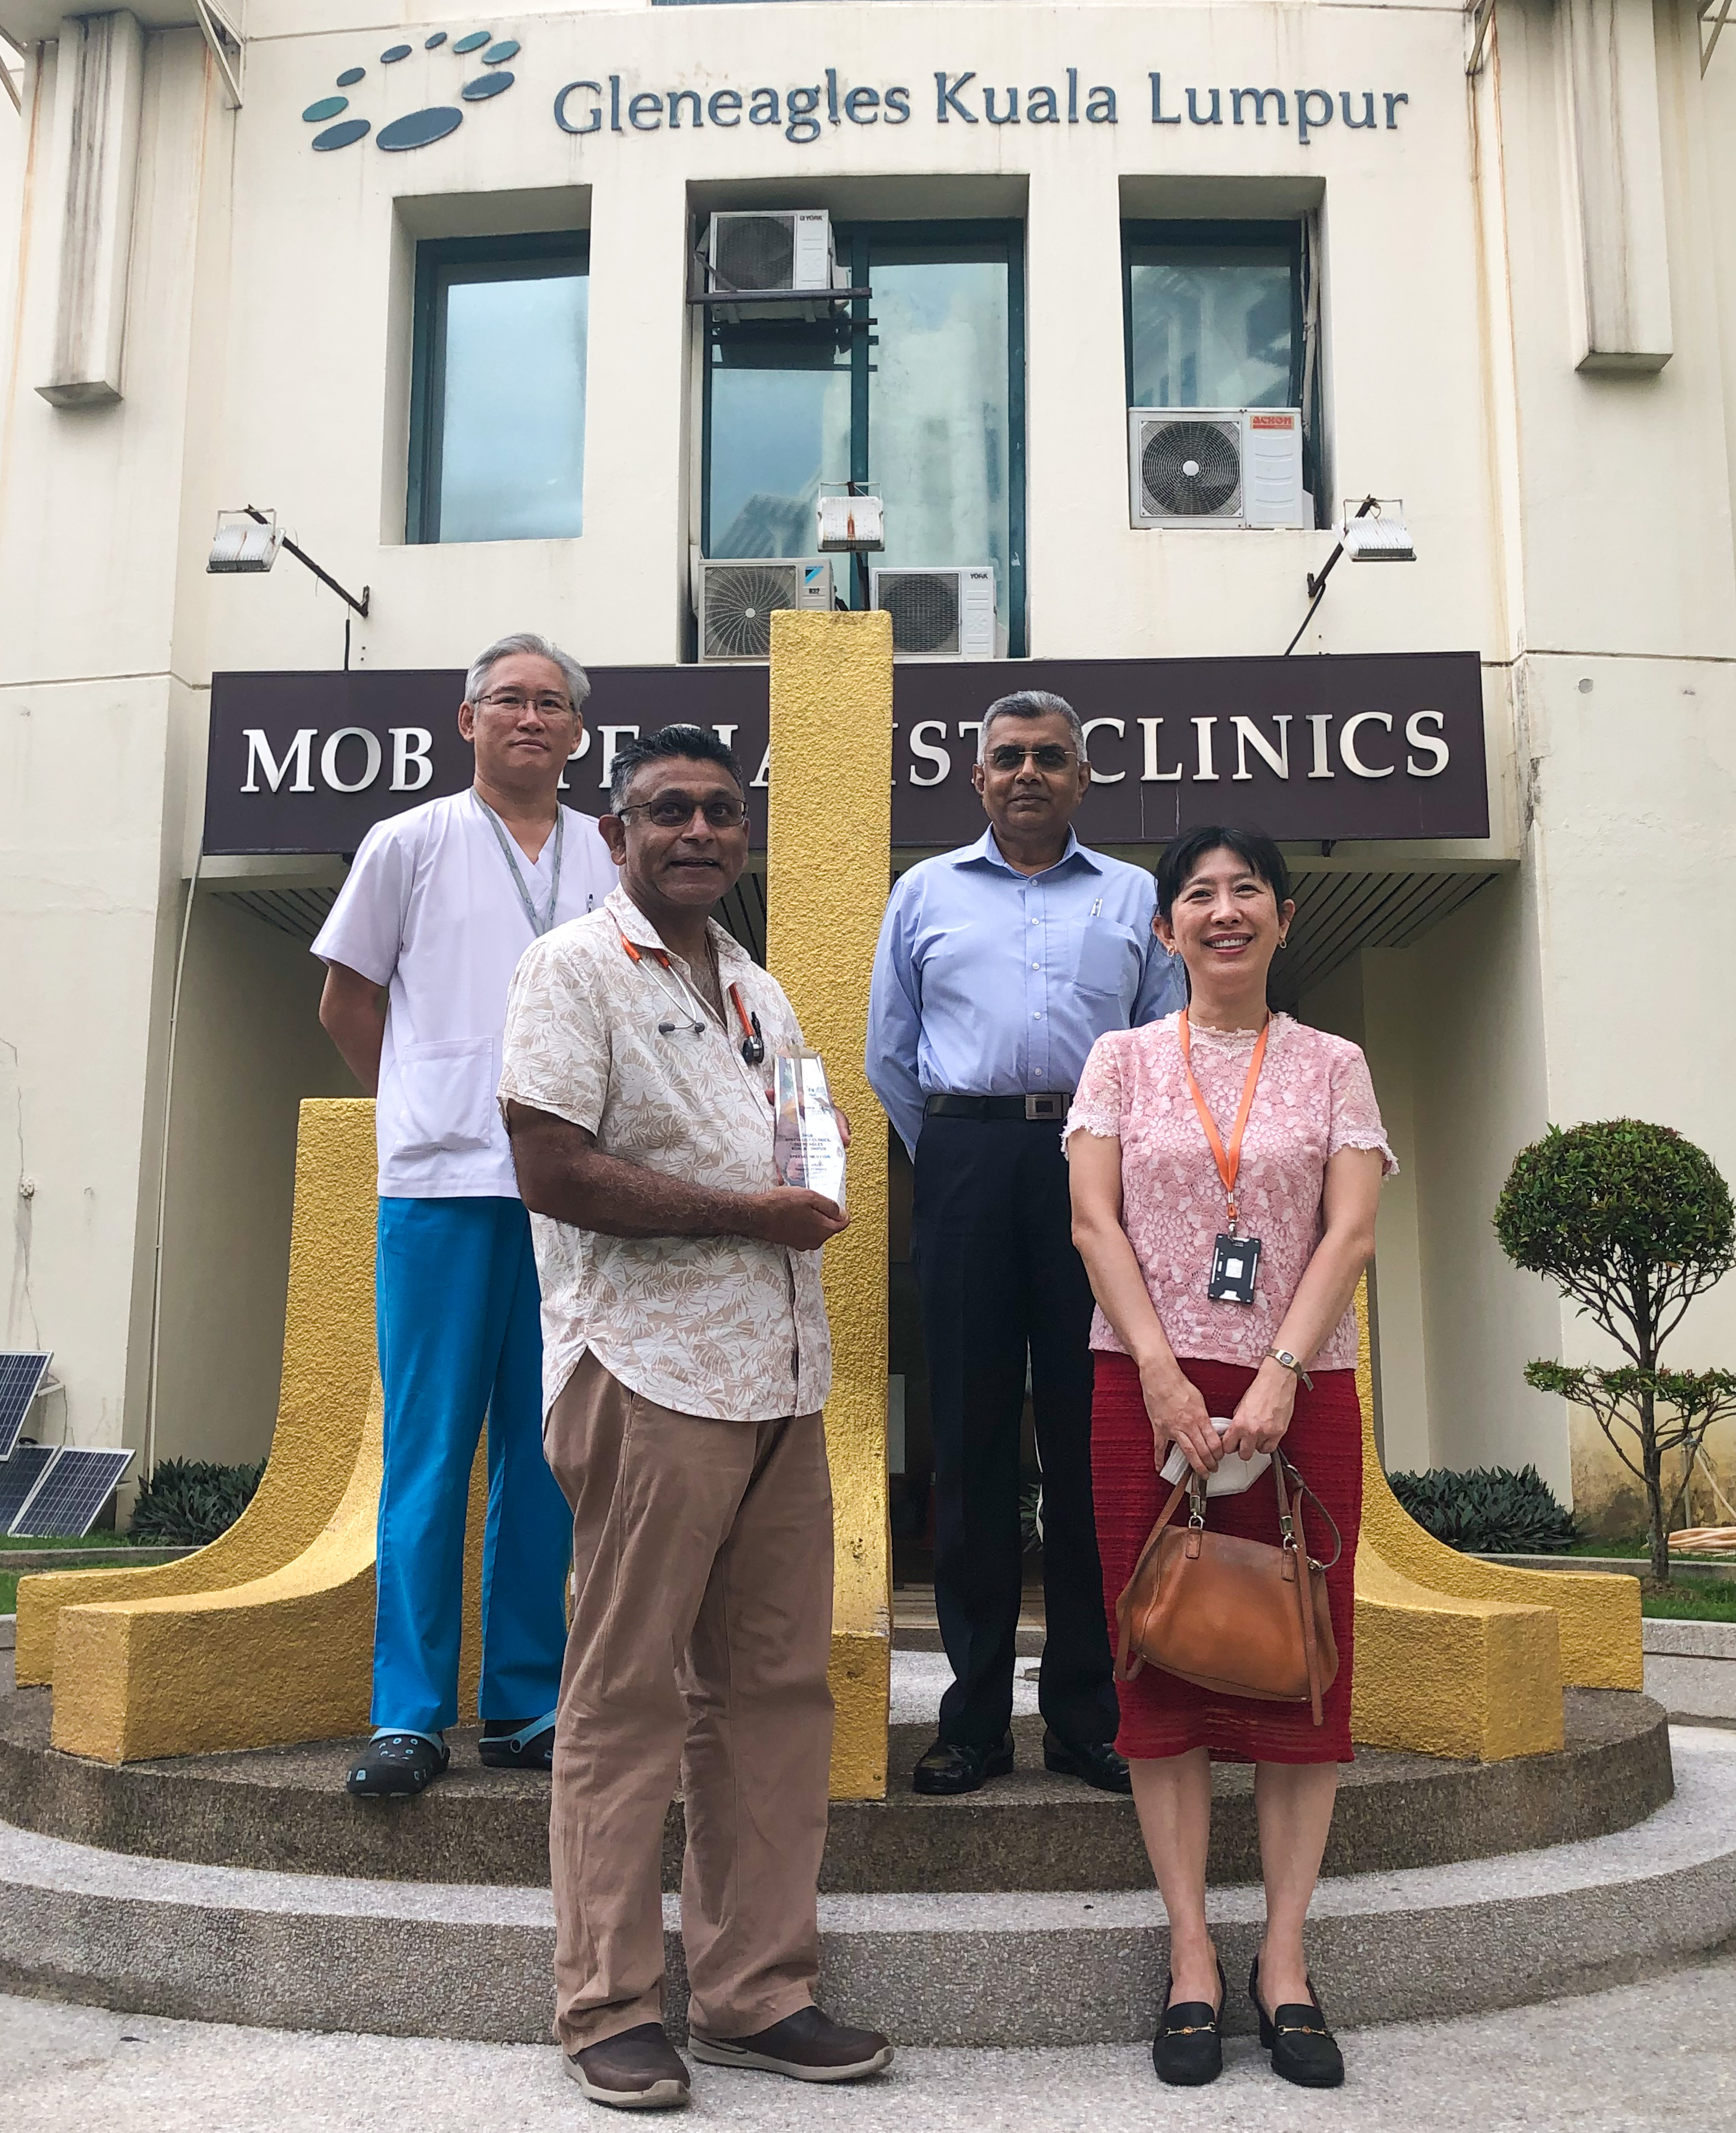 MOB Specialist Clinics